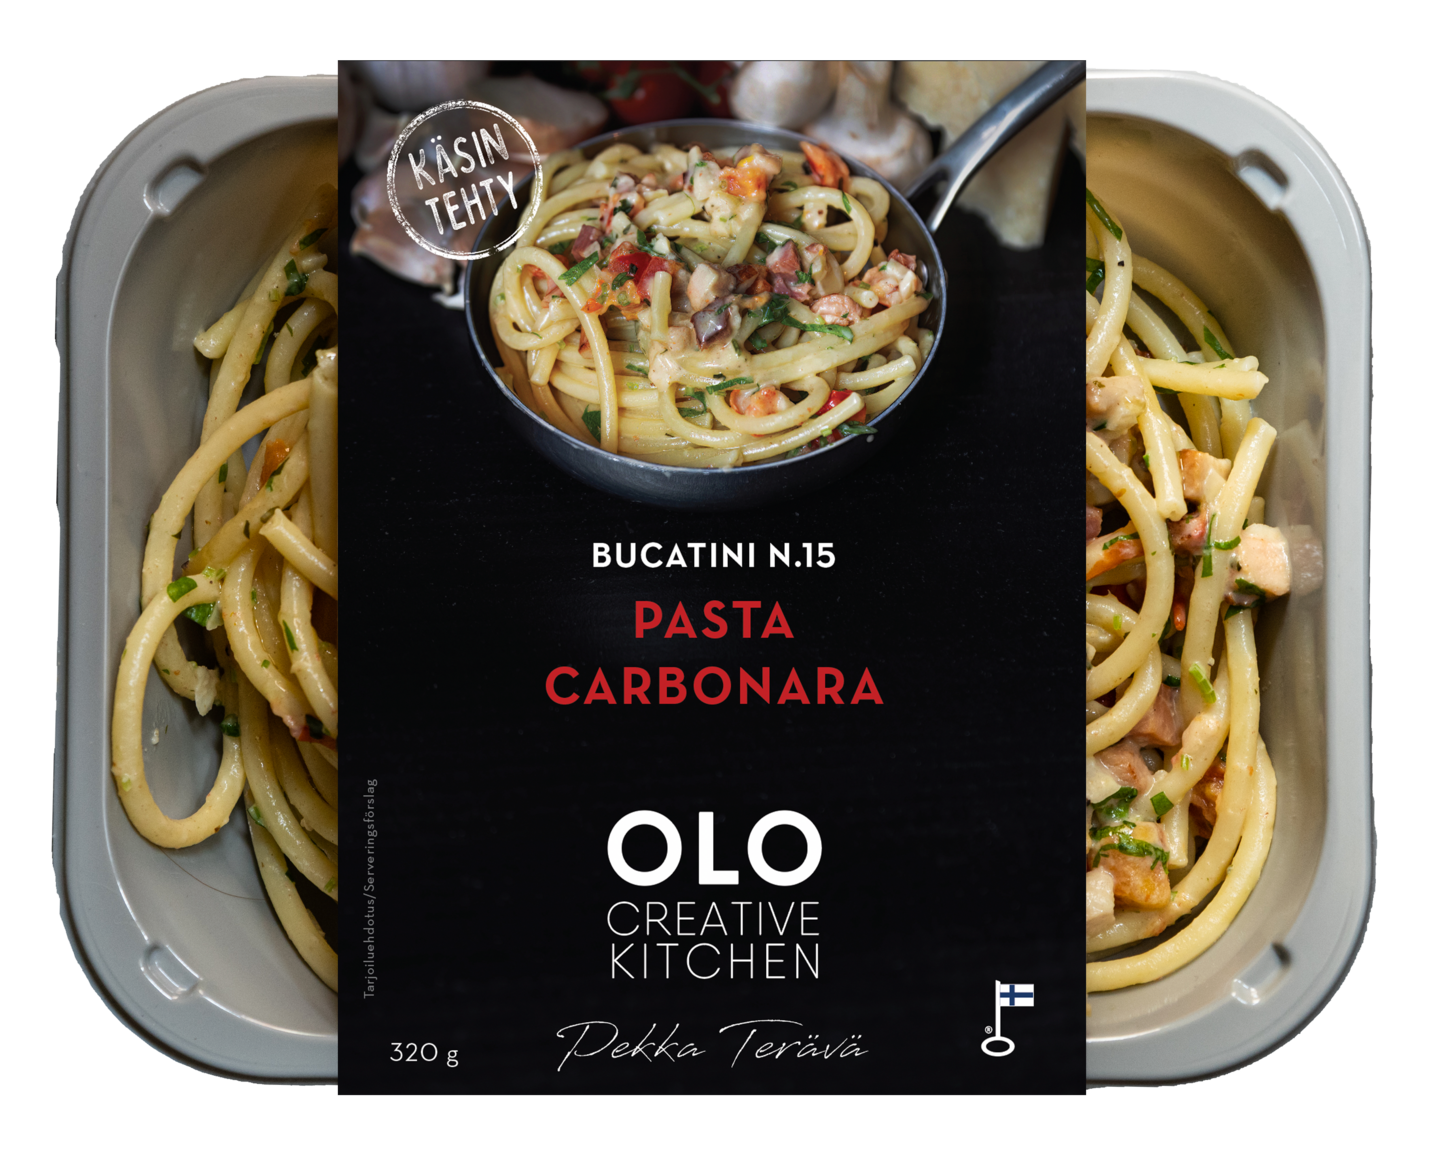 OLO Creative Kitchen pasta carbonara 320g hintoja 6,75€ |  